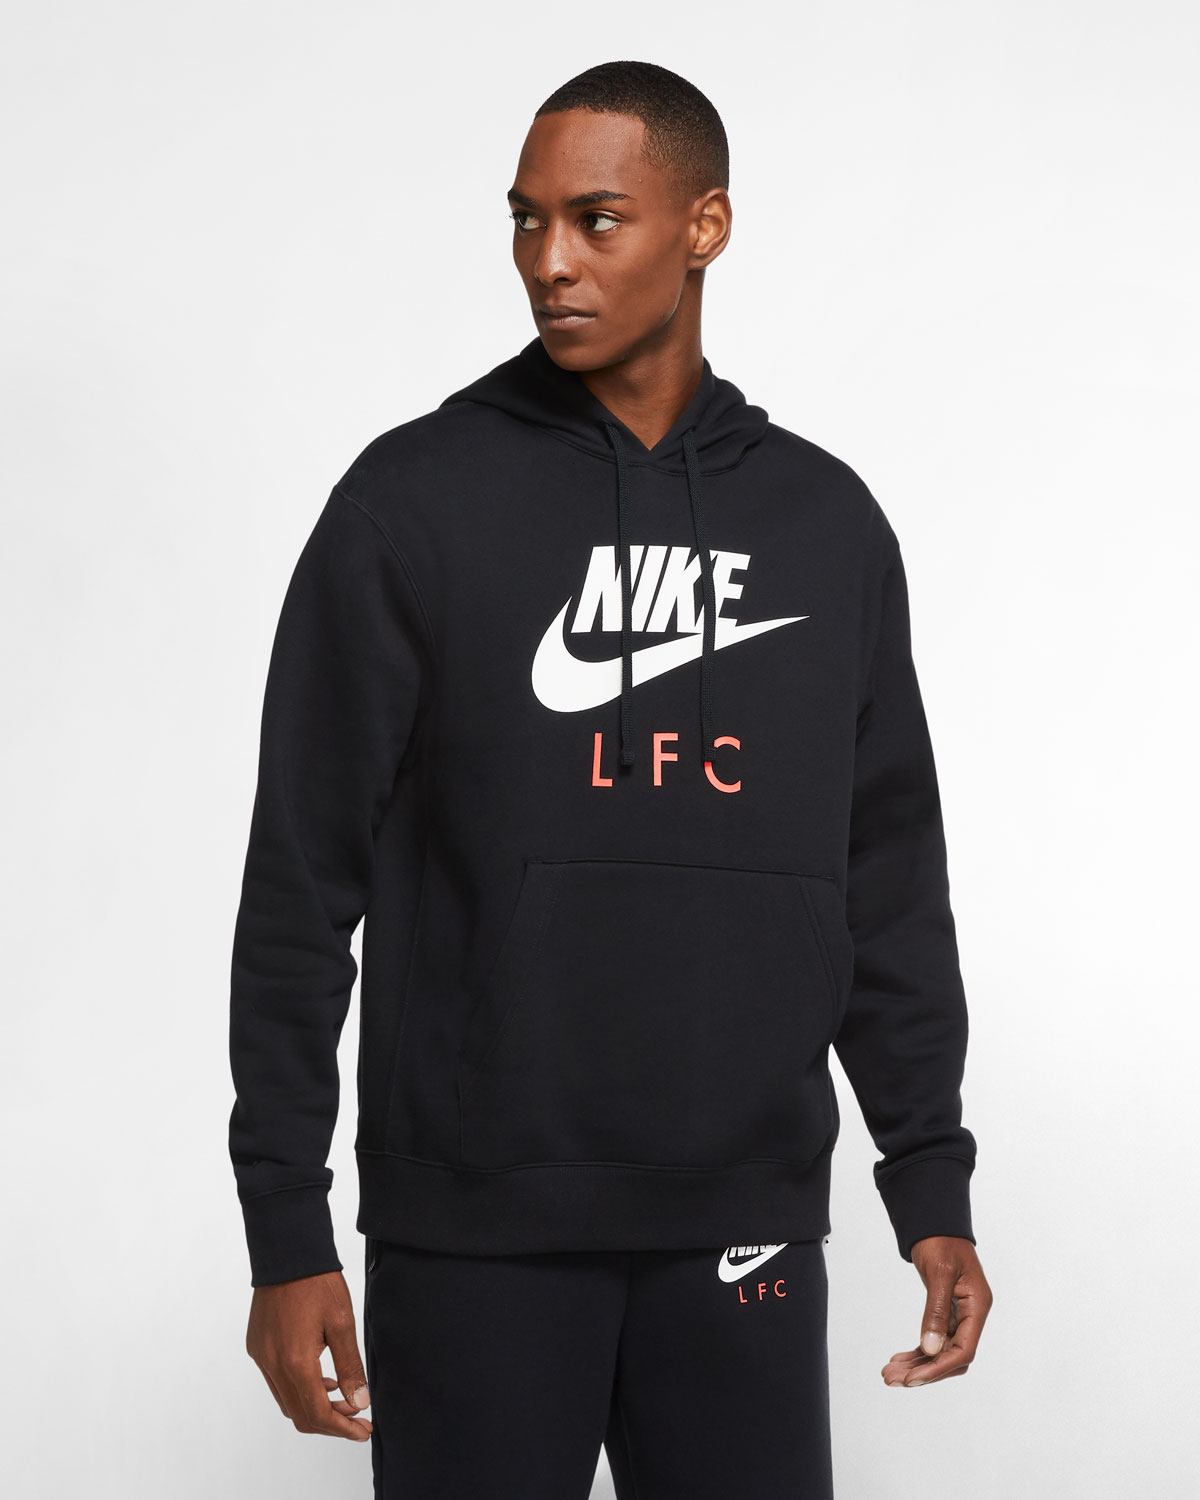 LFC Nike Mens Black Club Hoodie